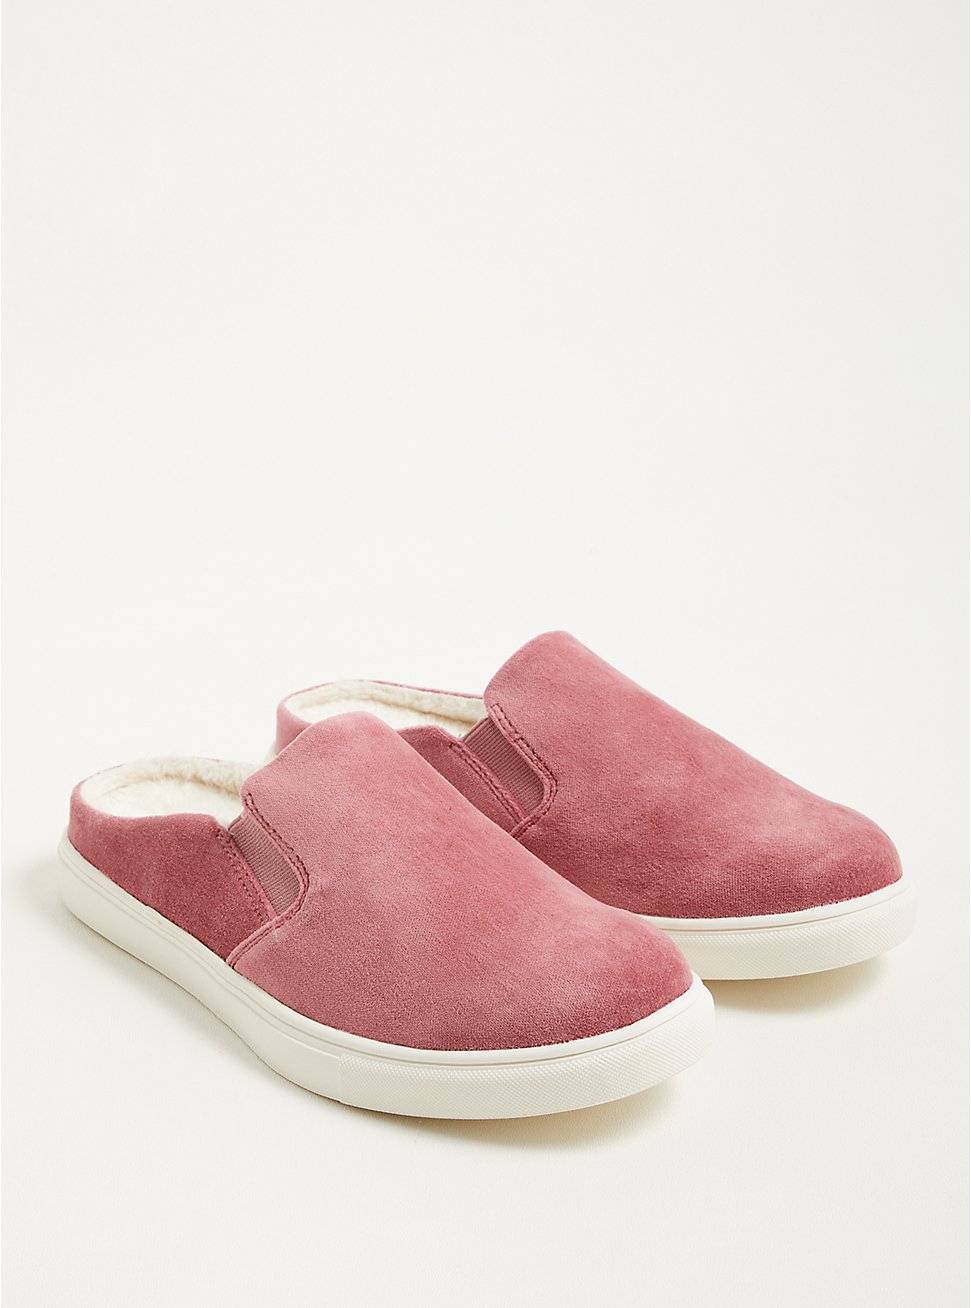 Fur-Lined Slip On Sneaker - Pink Velvet (WW), LIGHT PINK, hi-res